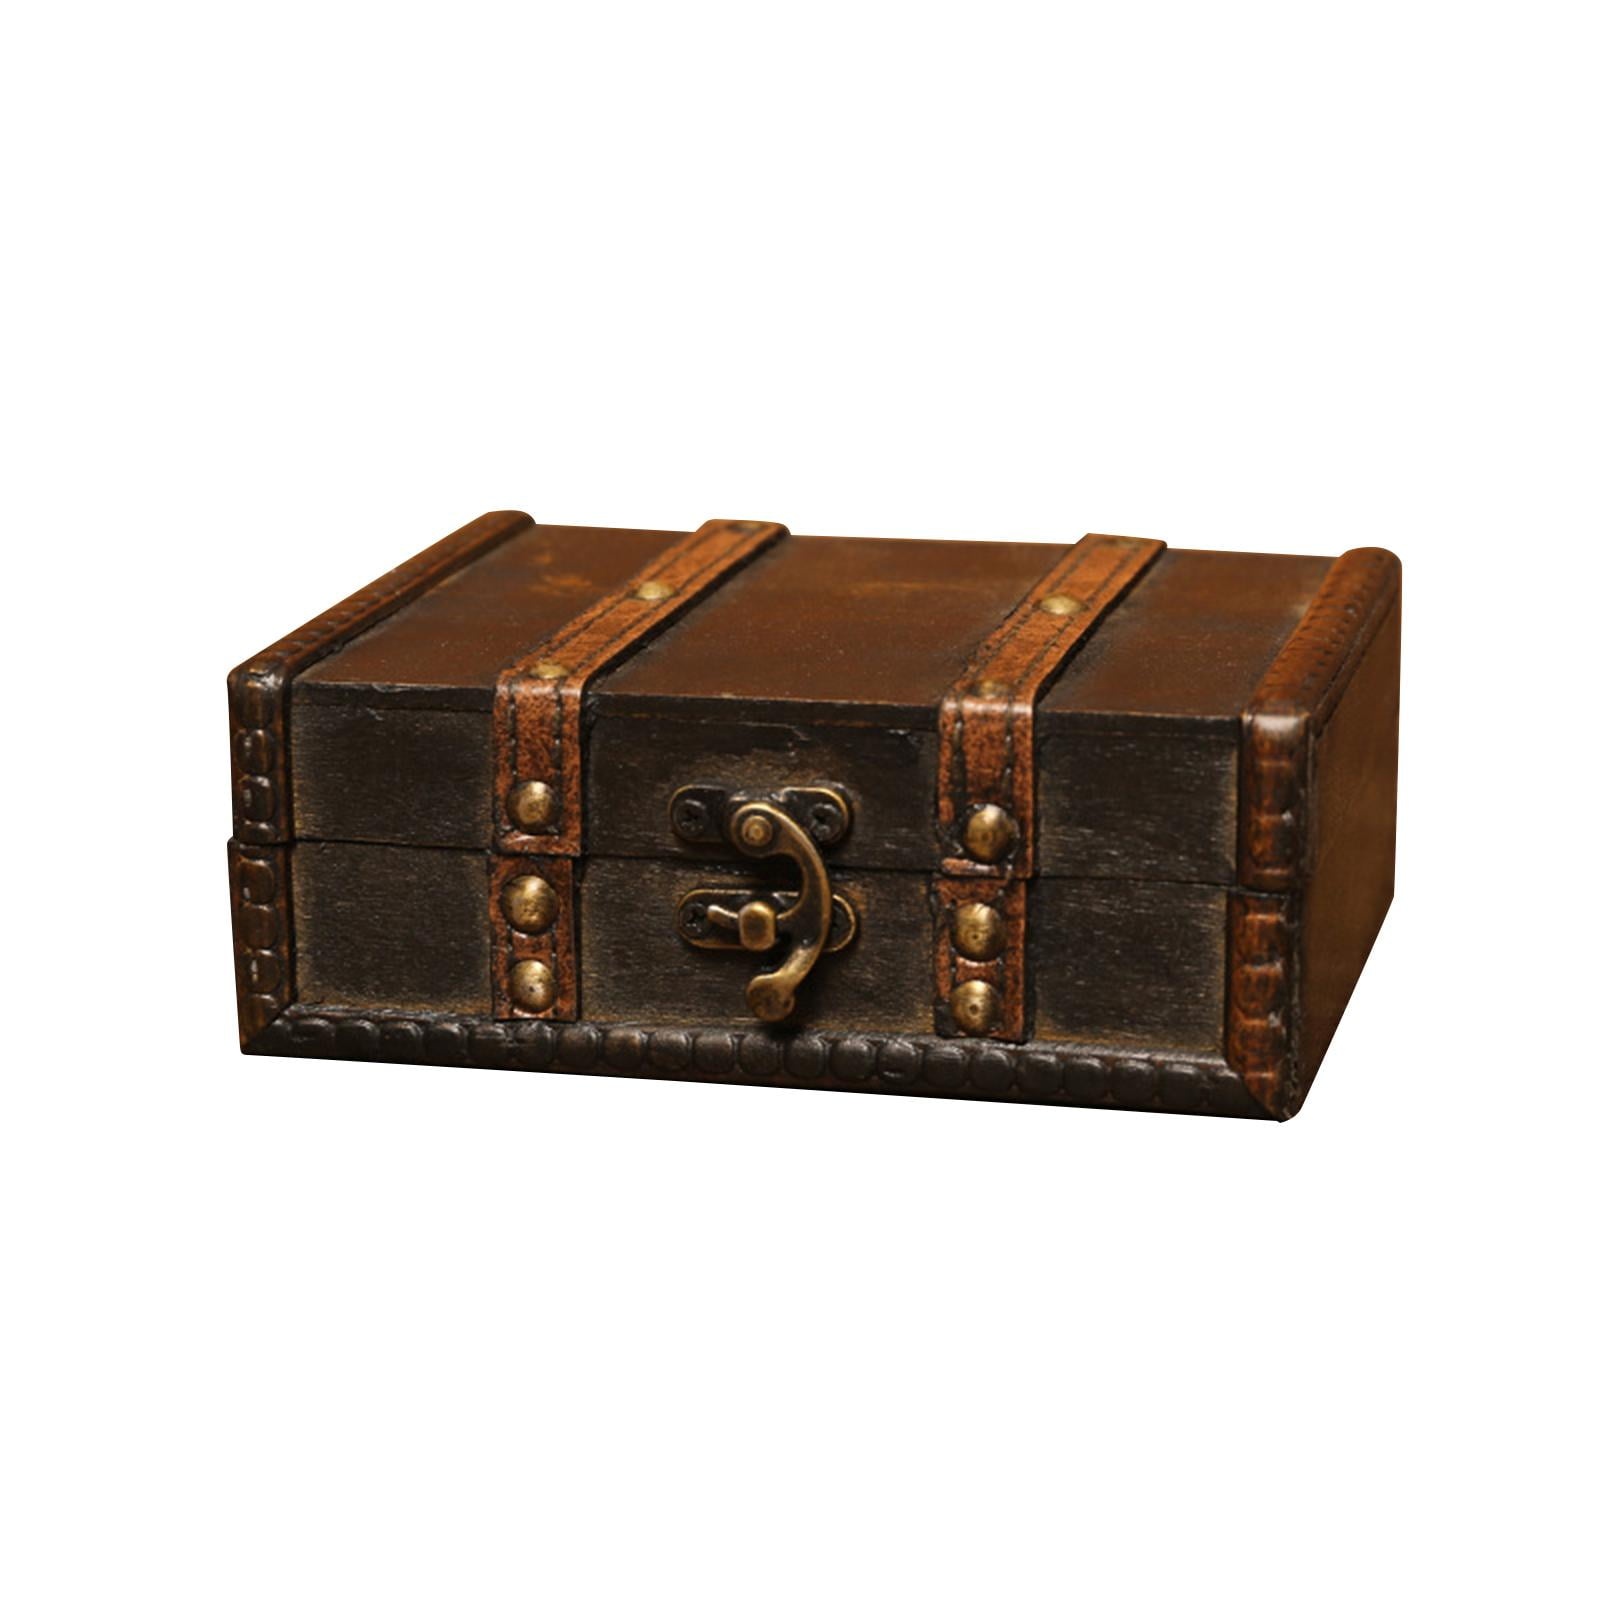 BIUDECO Jewelry Storage Box Treasure Chest Wooden Chest Bank